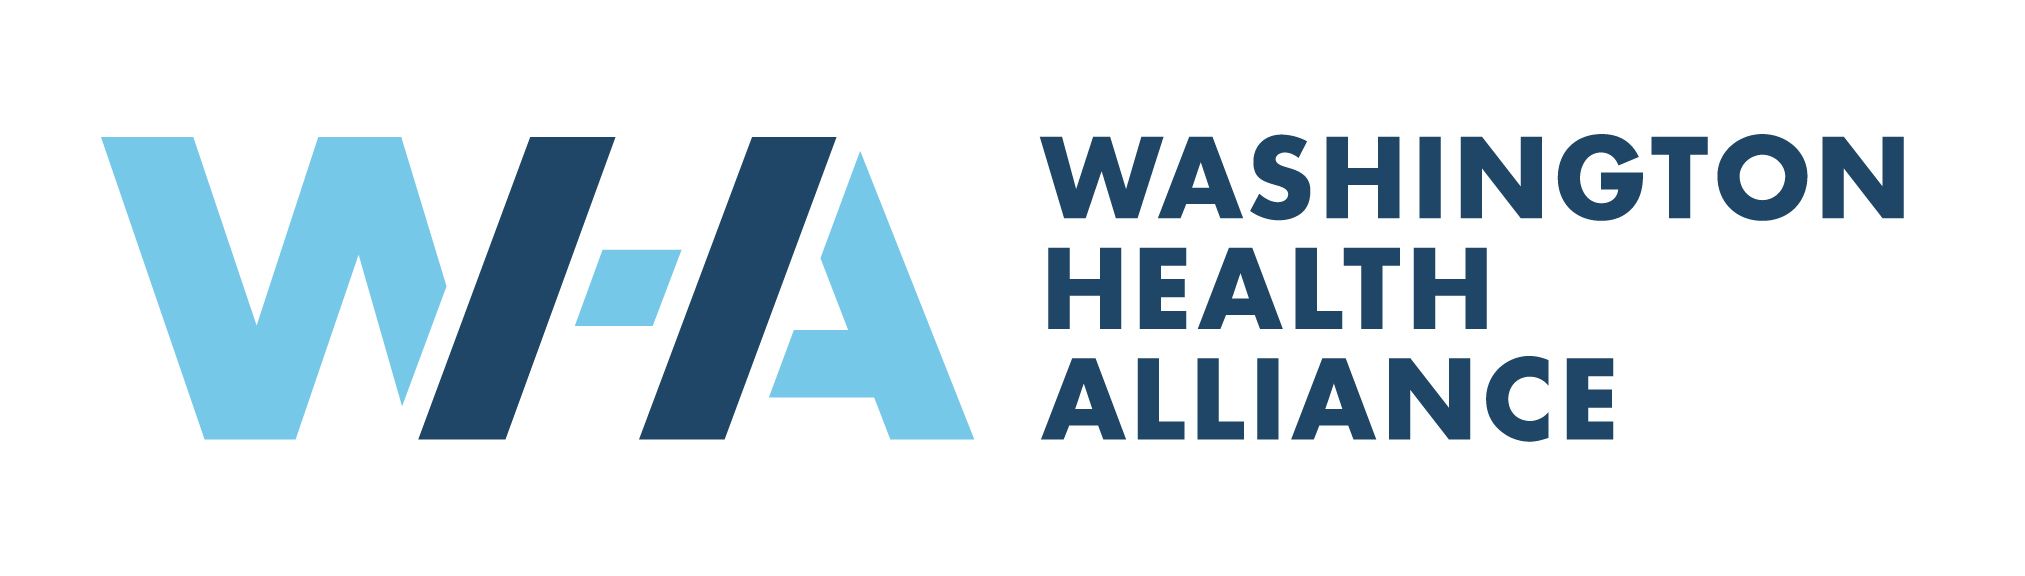 The Washington Health Alliance logo